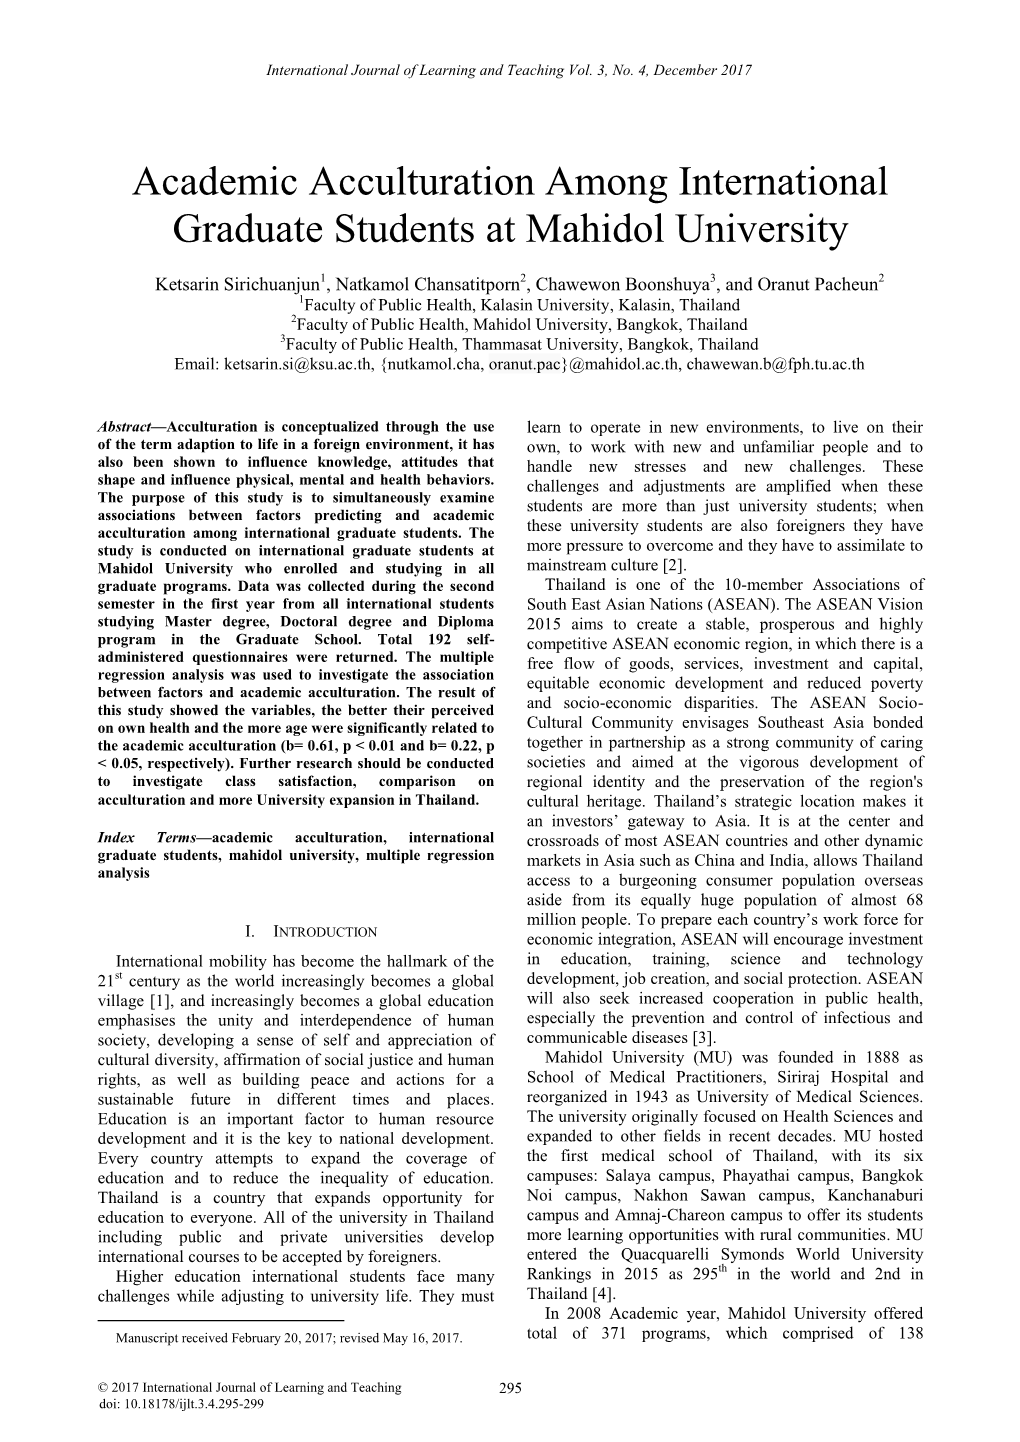 Academic Acculturation Among International Graduate Students at Mahidol University